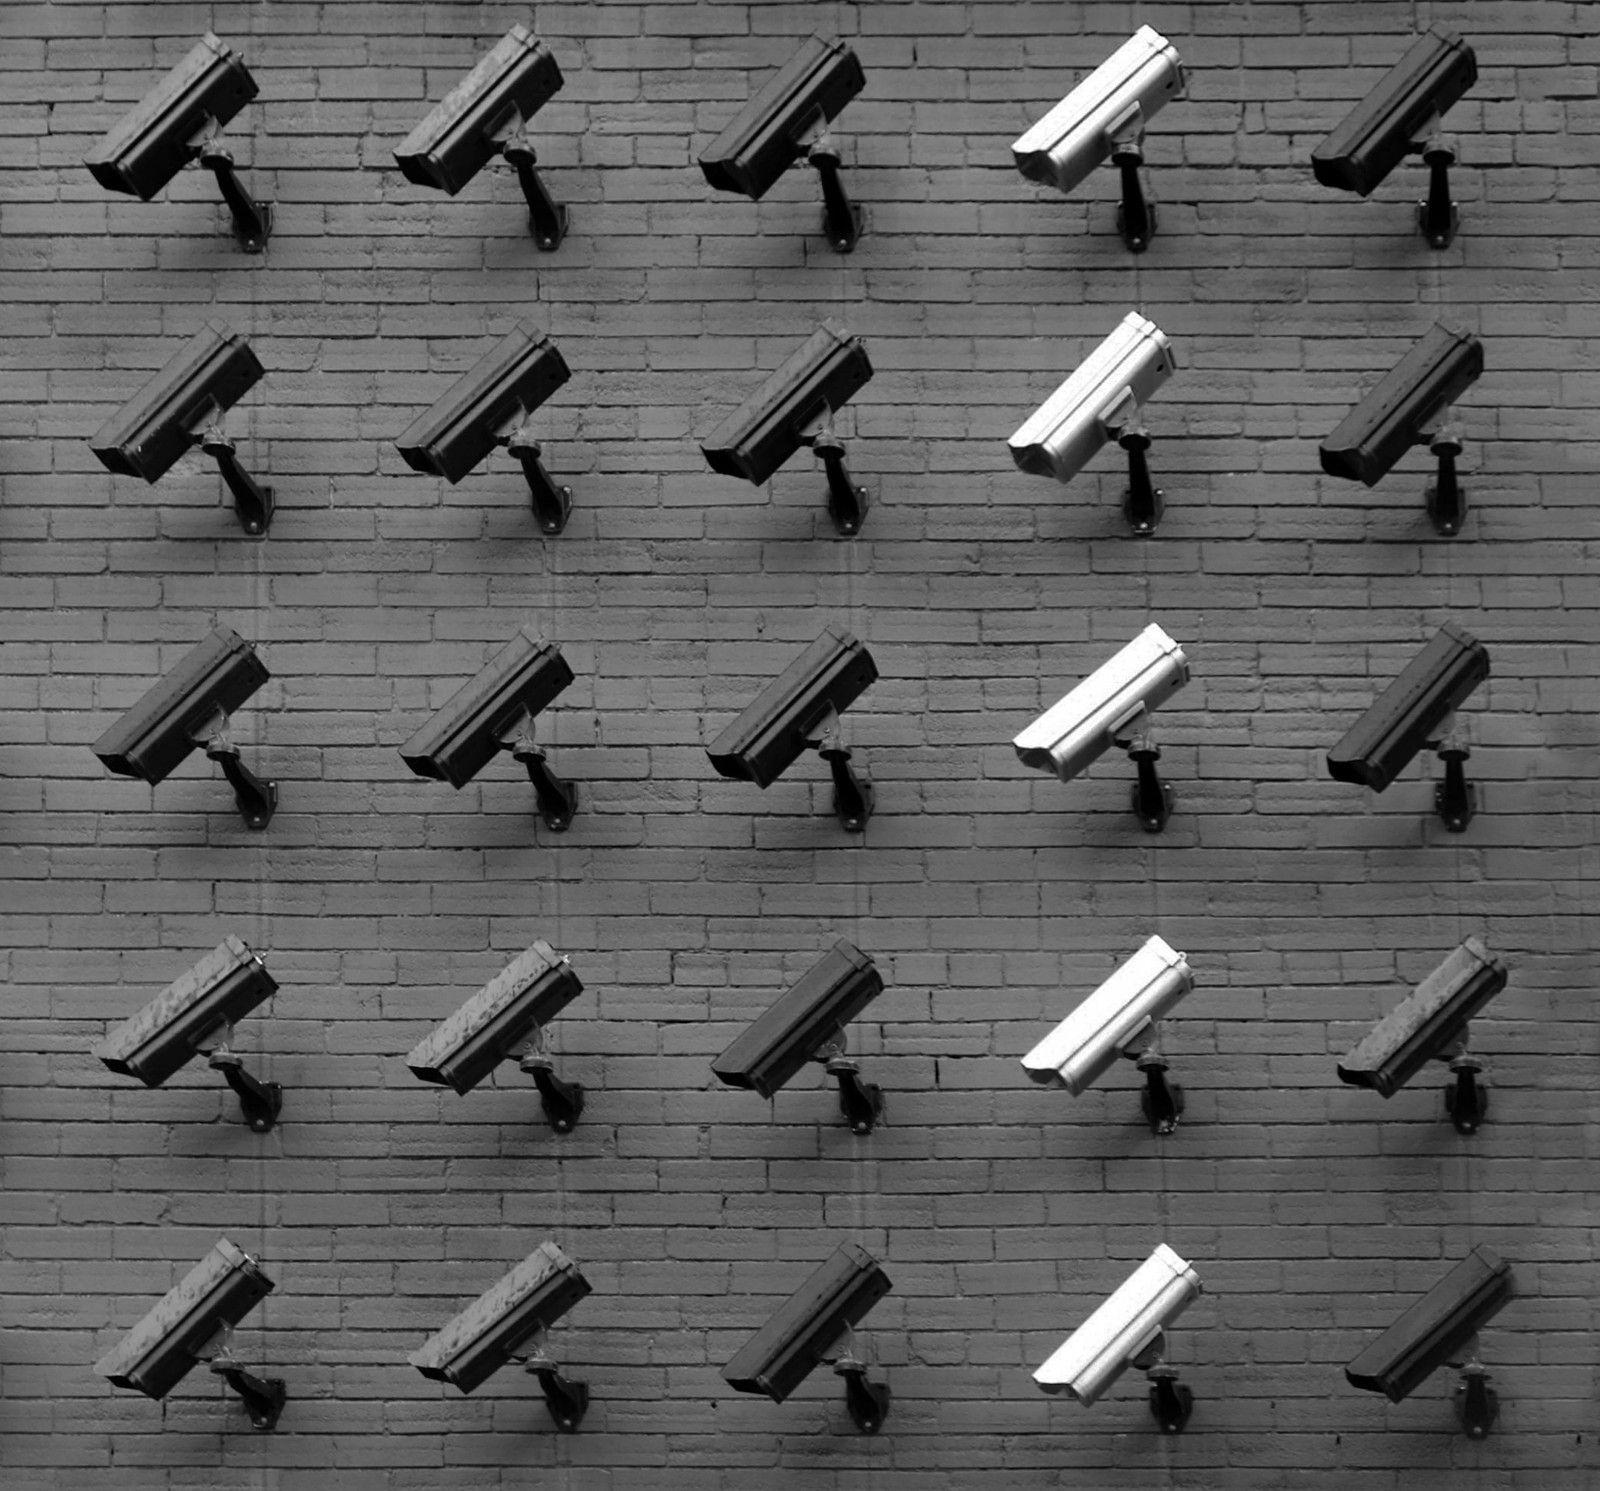 Employee Surveillance Campaign Image